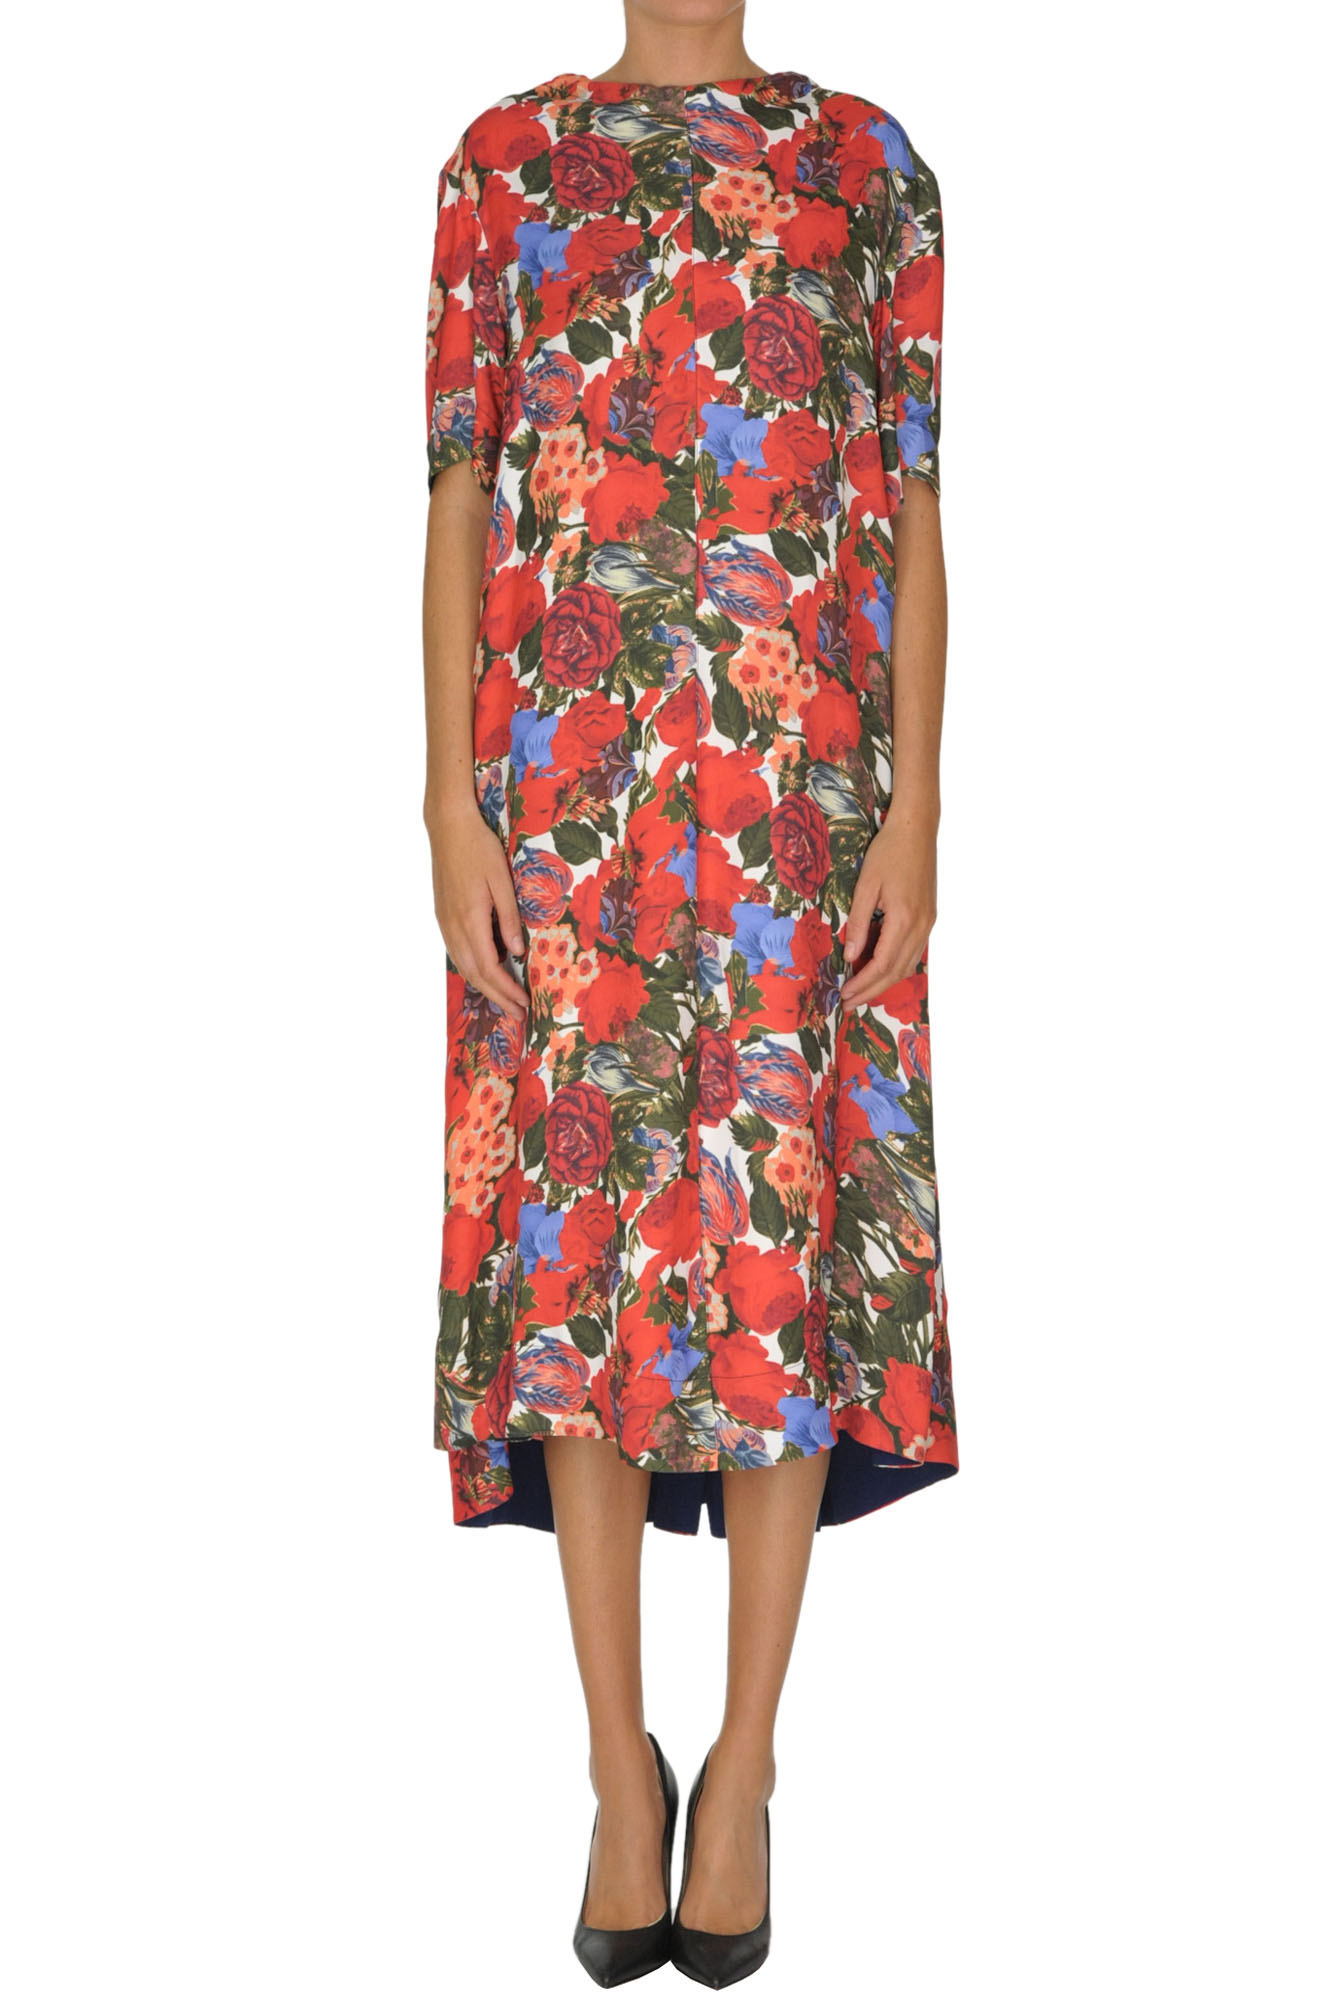 Marni Oversized flower print dress - Buy online on Glamest Fashion ...